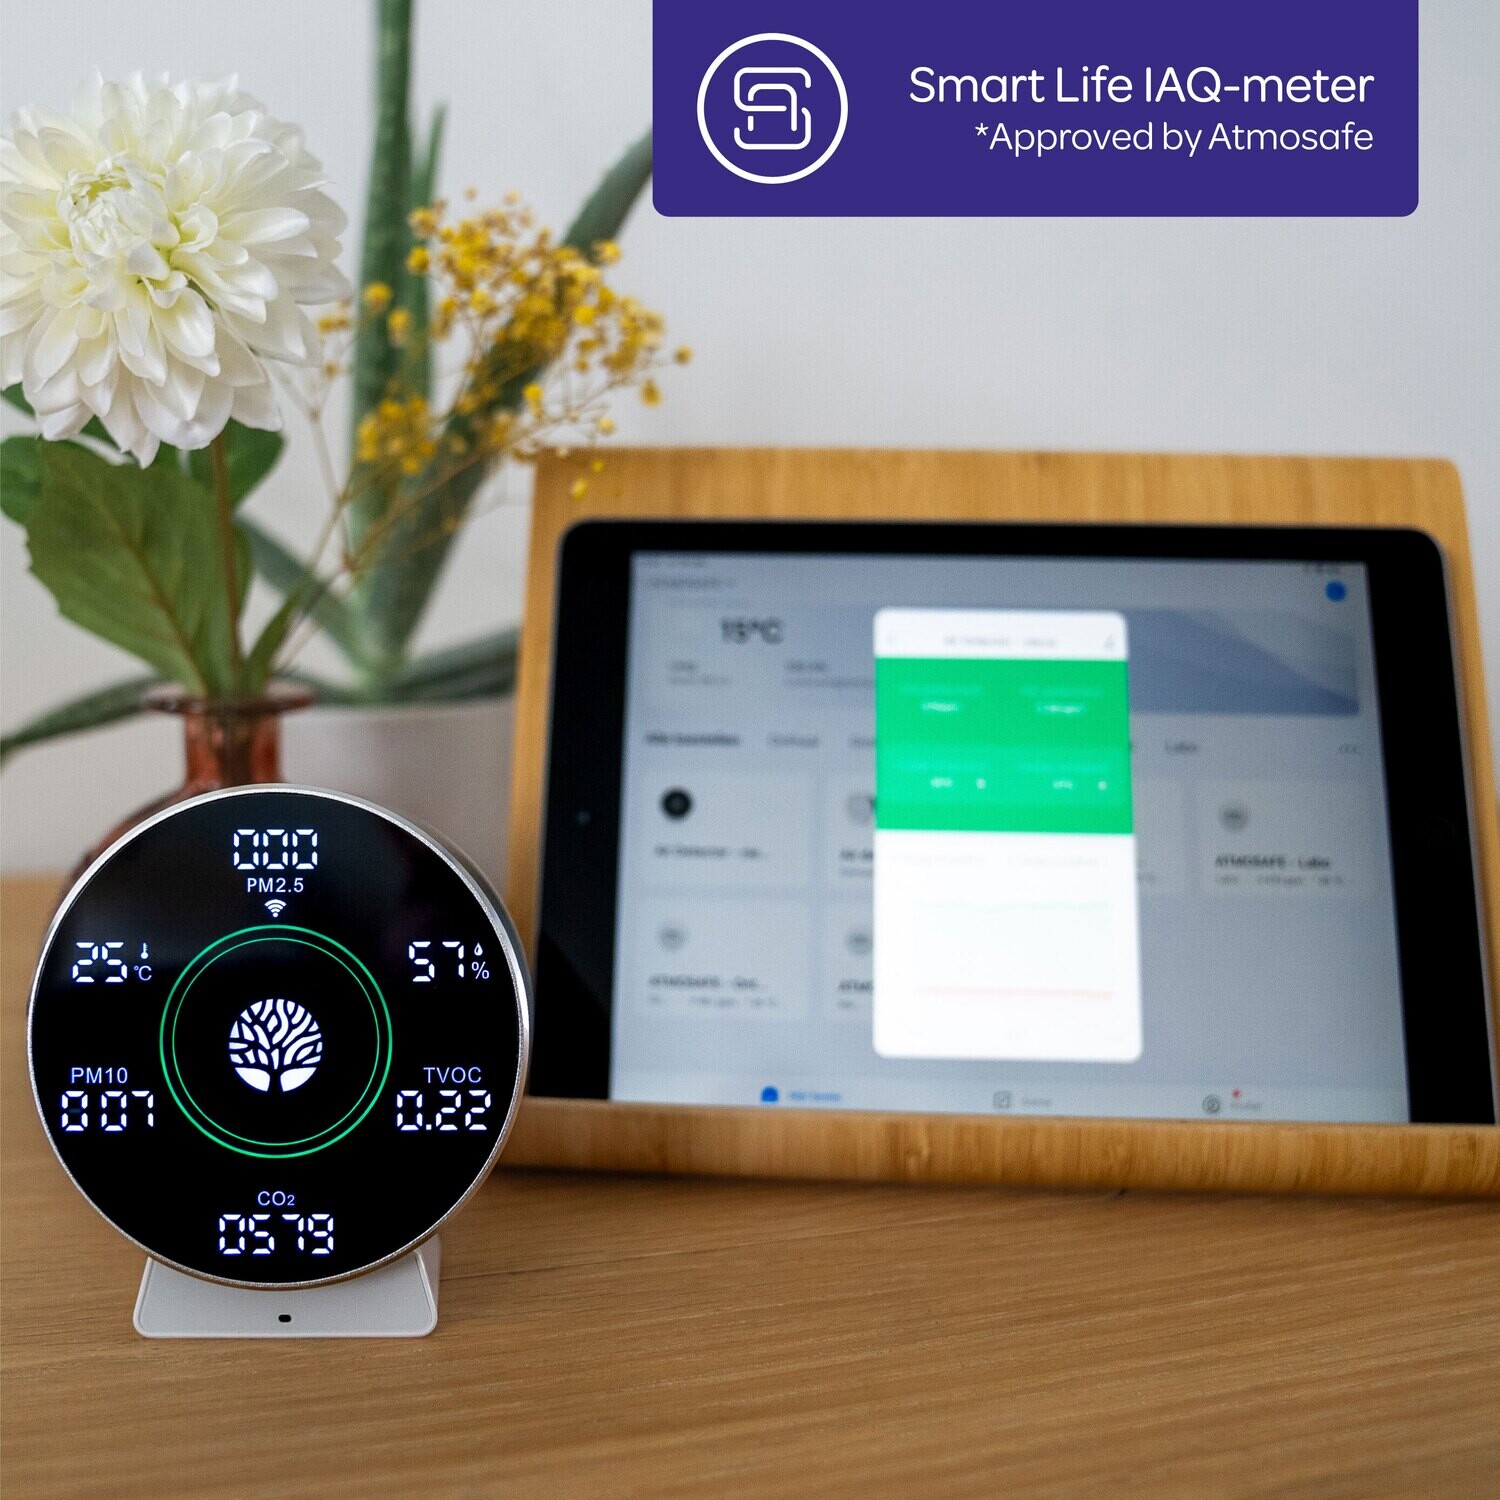 Smart Life IAQ-meter